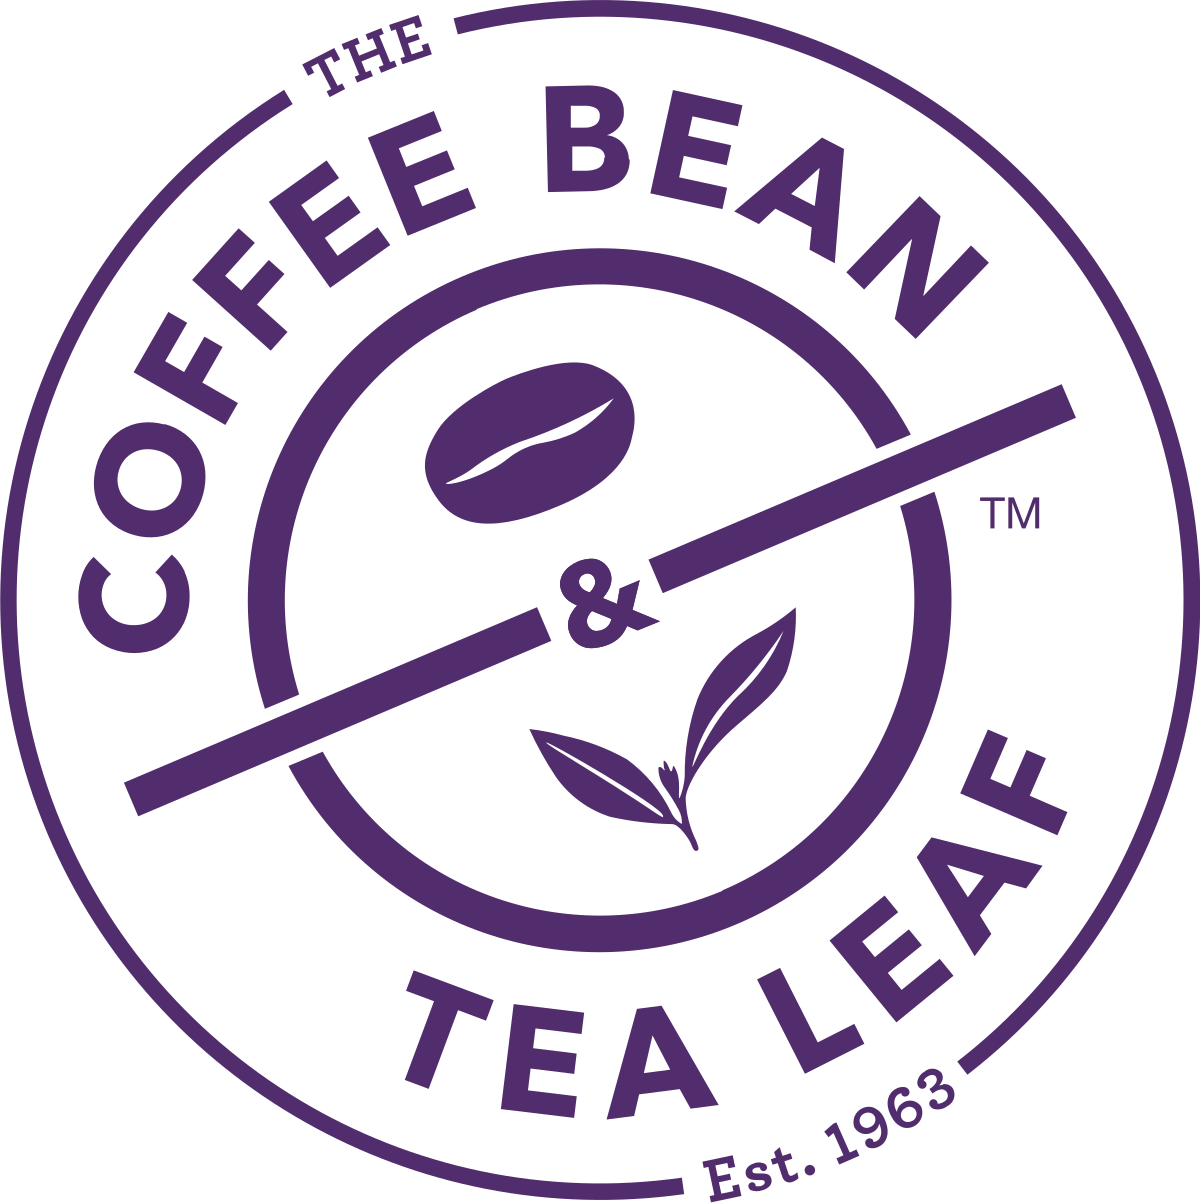 Download The Coffee Bean Tea Leaf Wikipedia